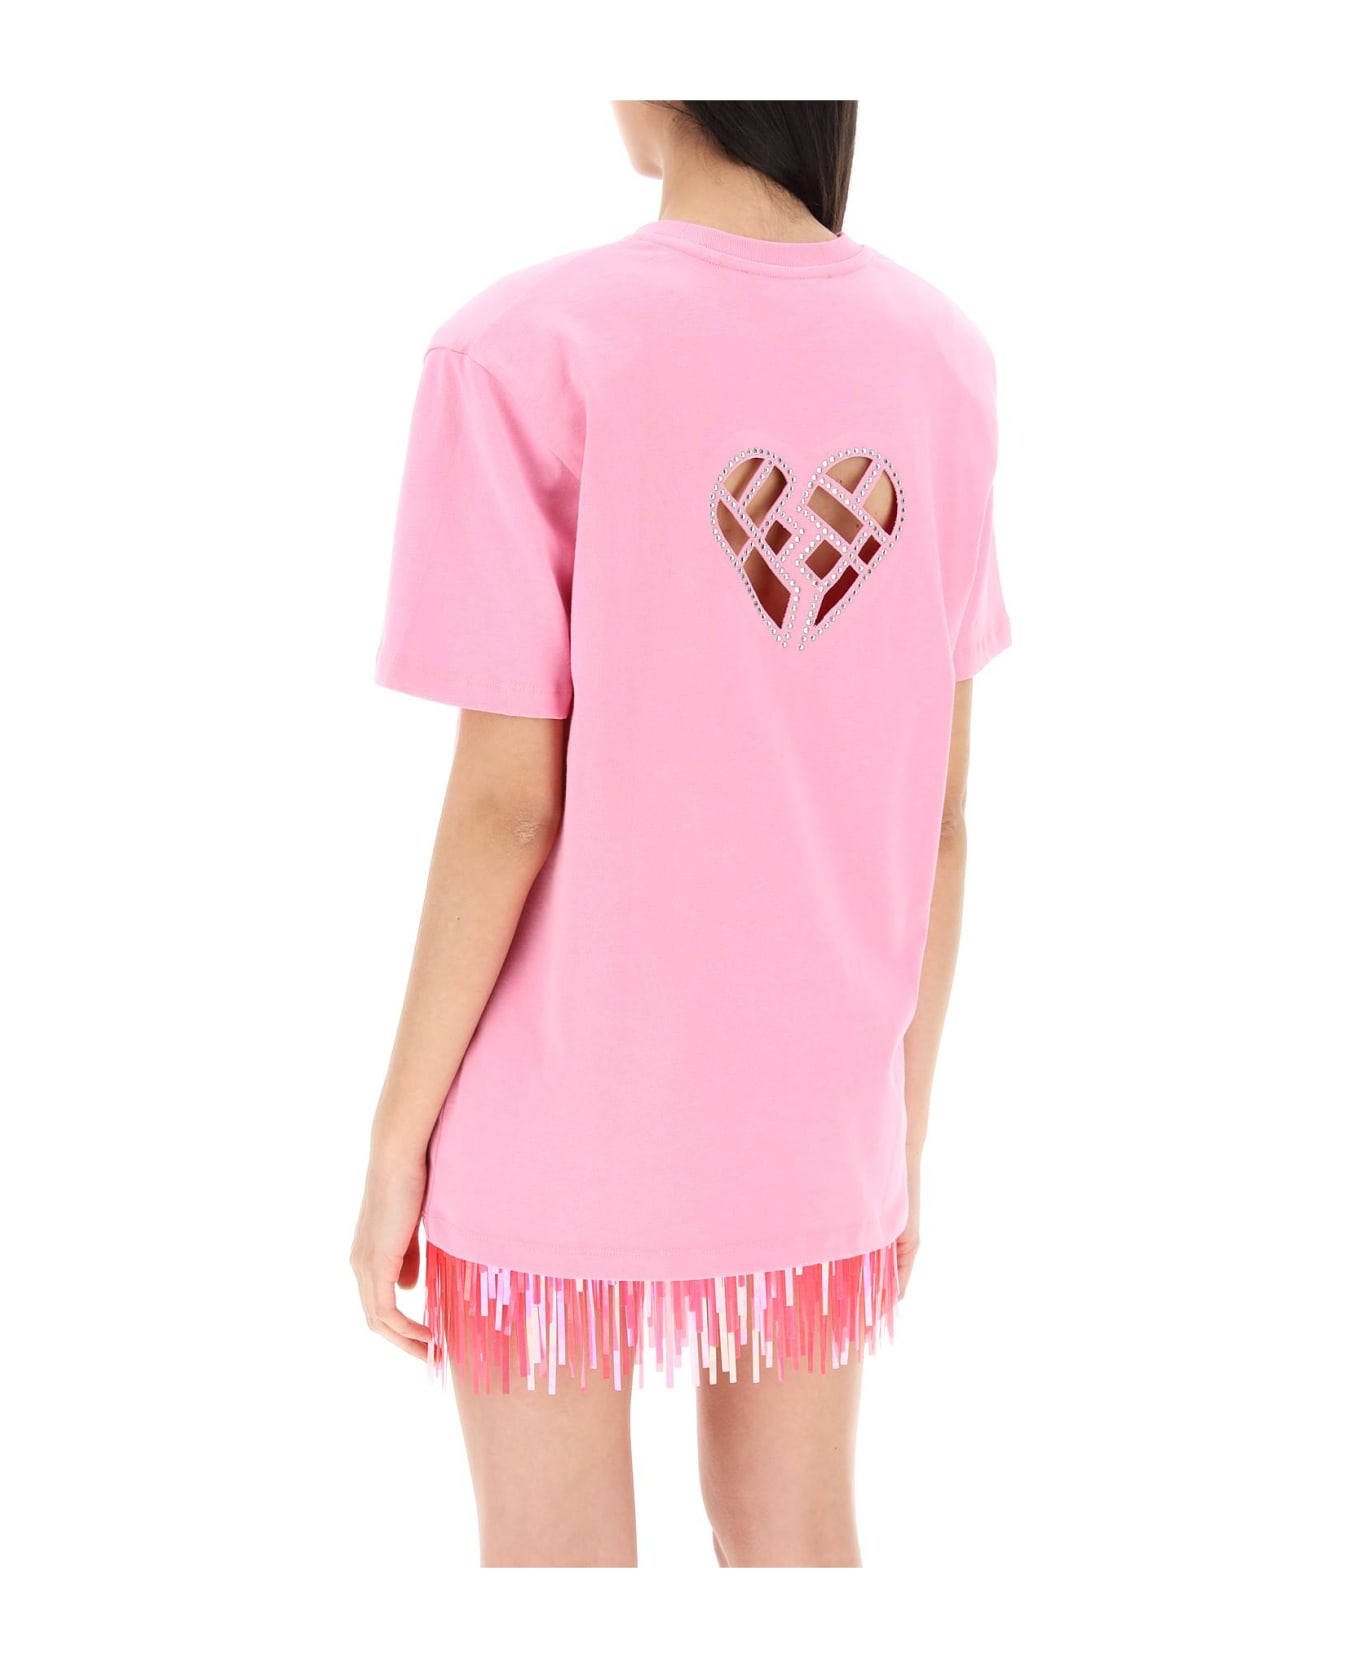 Rotate by Birger Christensen 'aja' Cotton T-shirt - BEGONIA PINK (Pink) Tシャツ